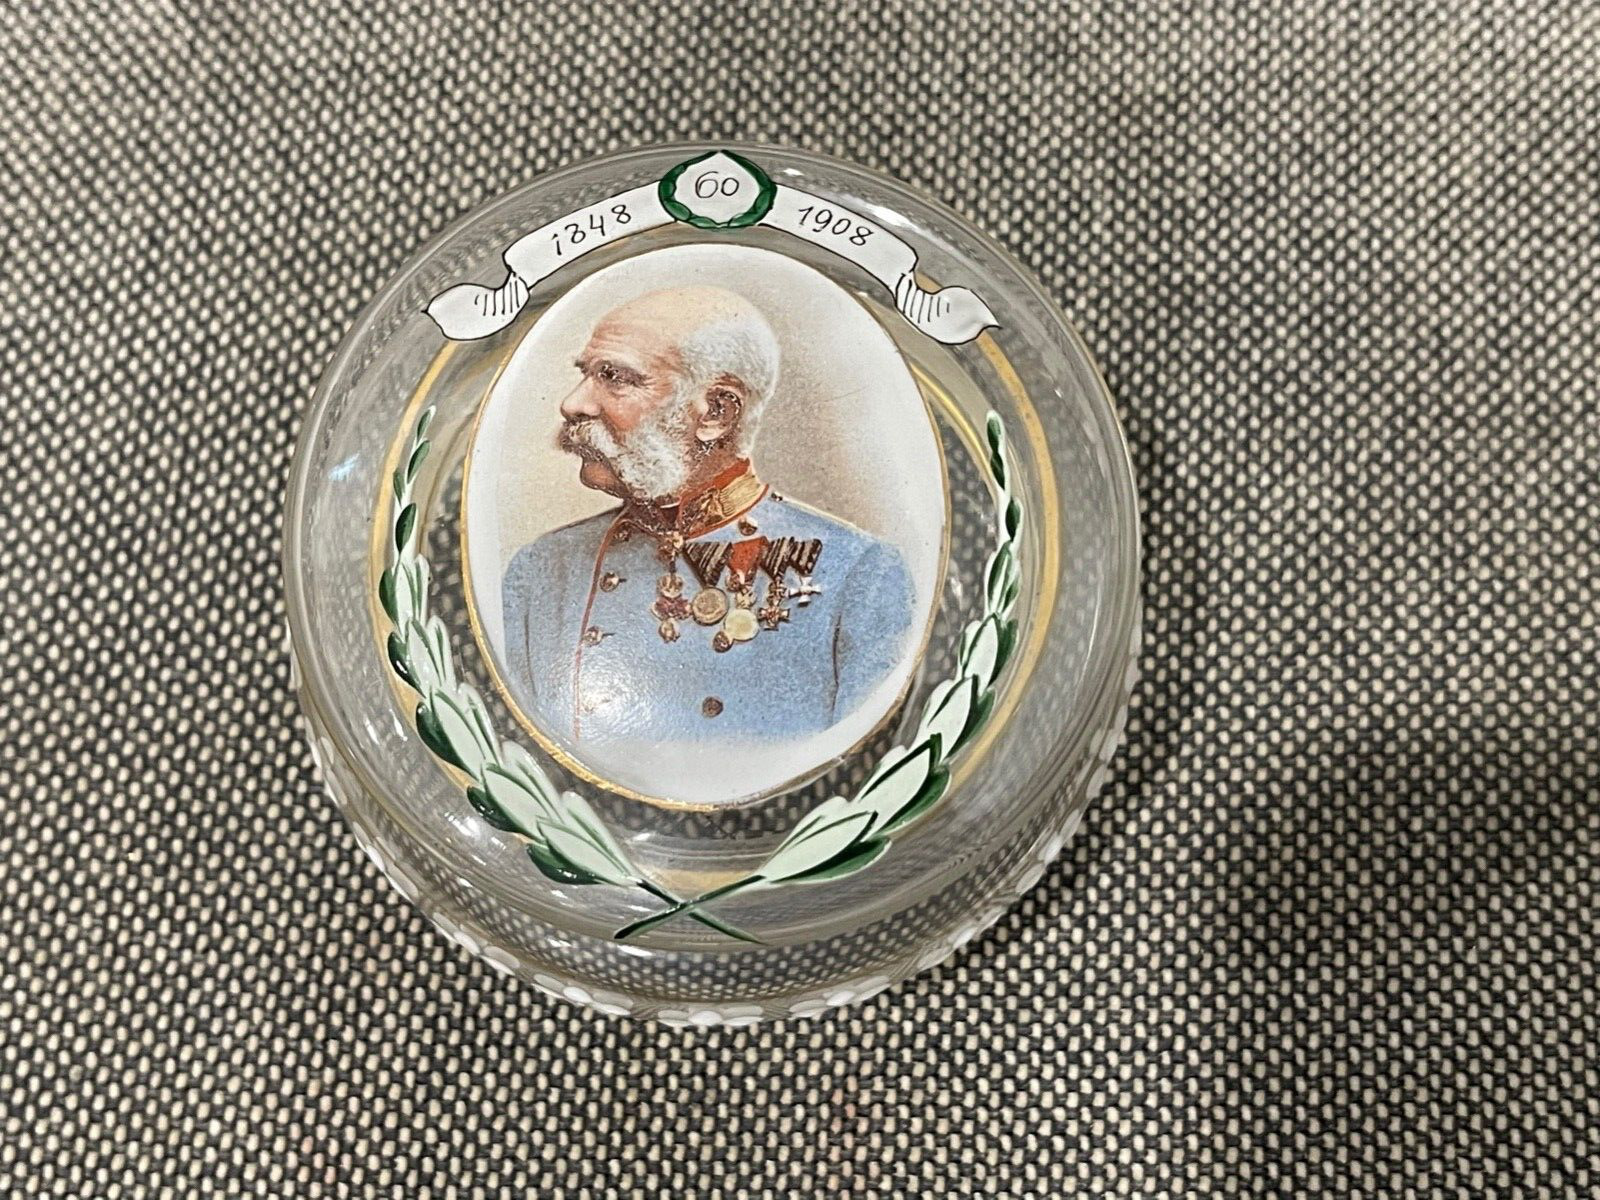 Antique 1908 Glass & Enamel Painted Box 60 Years Emperor Franz Joseph I Austria